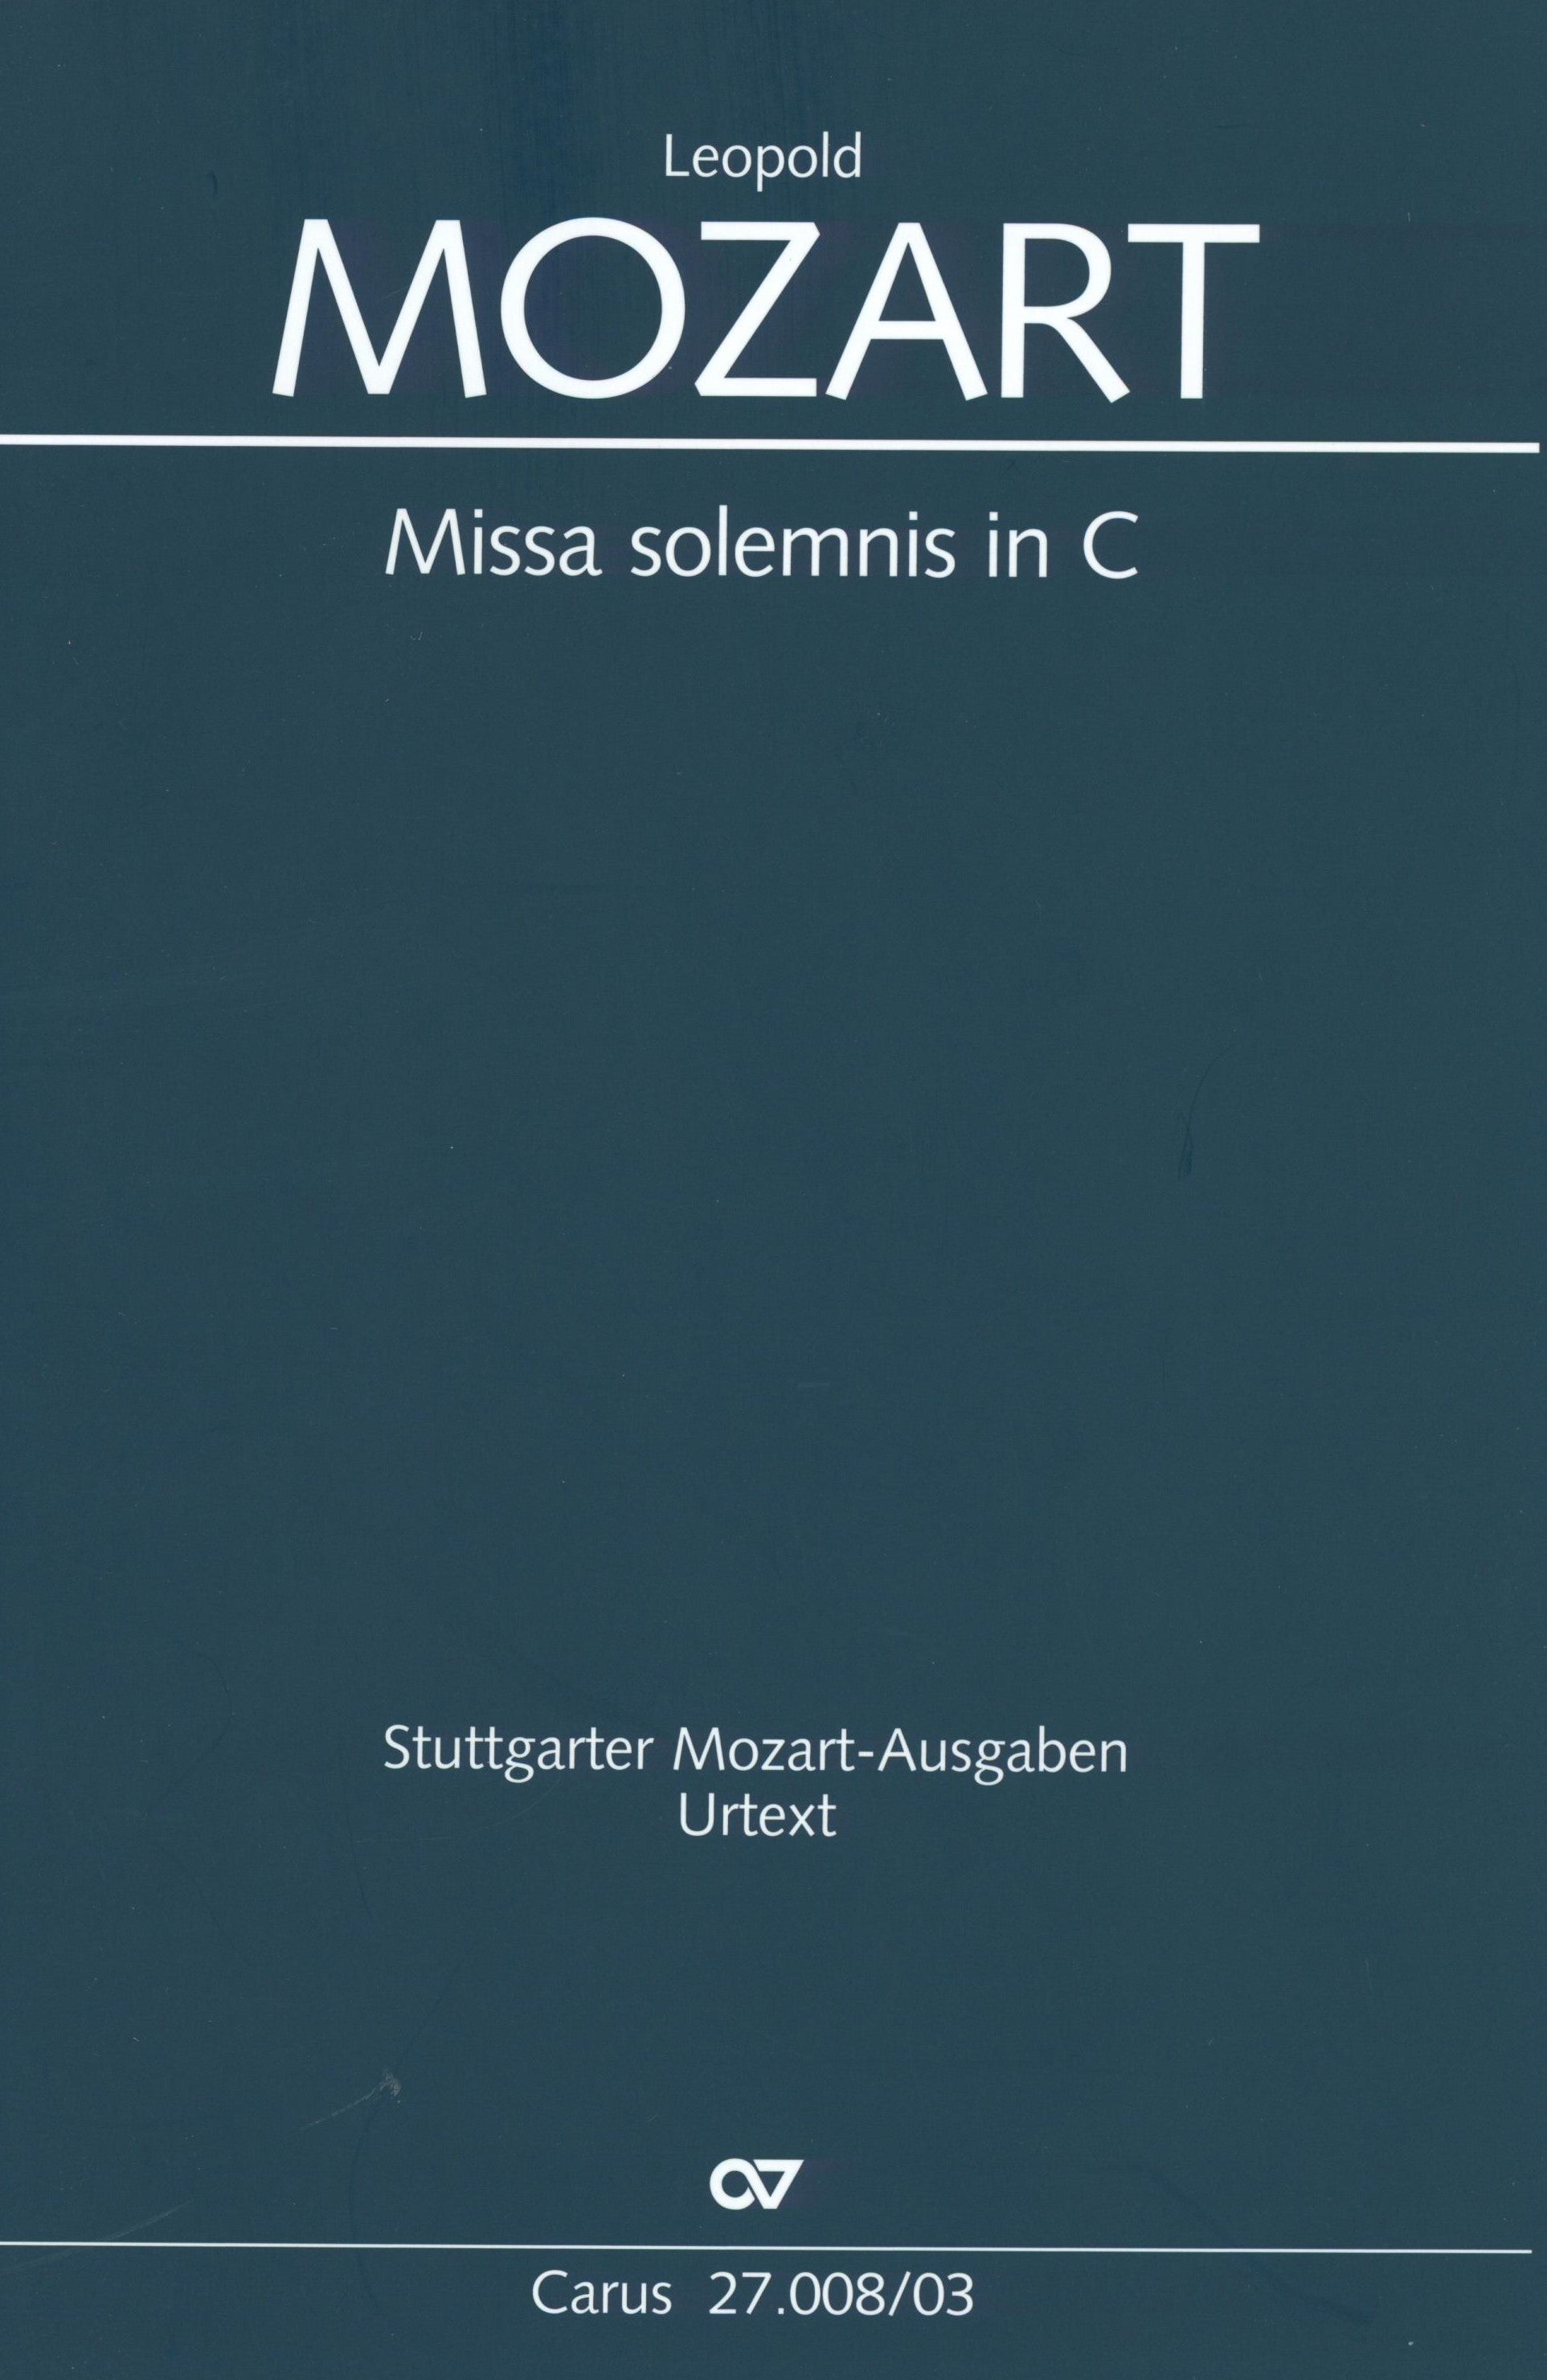 L. Mozart: Missa solemnis in C Major